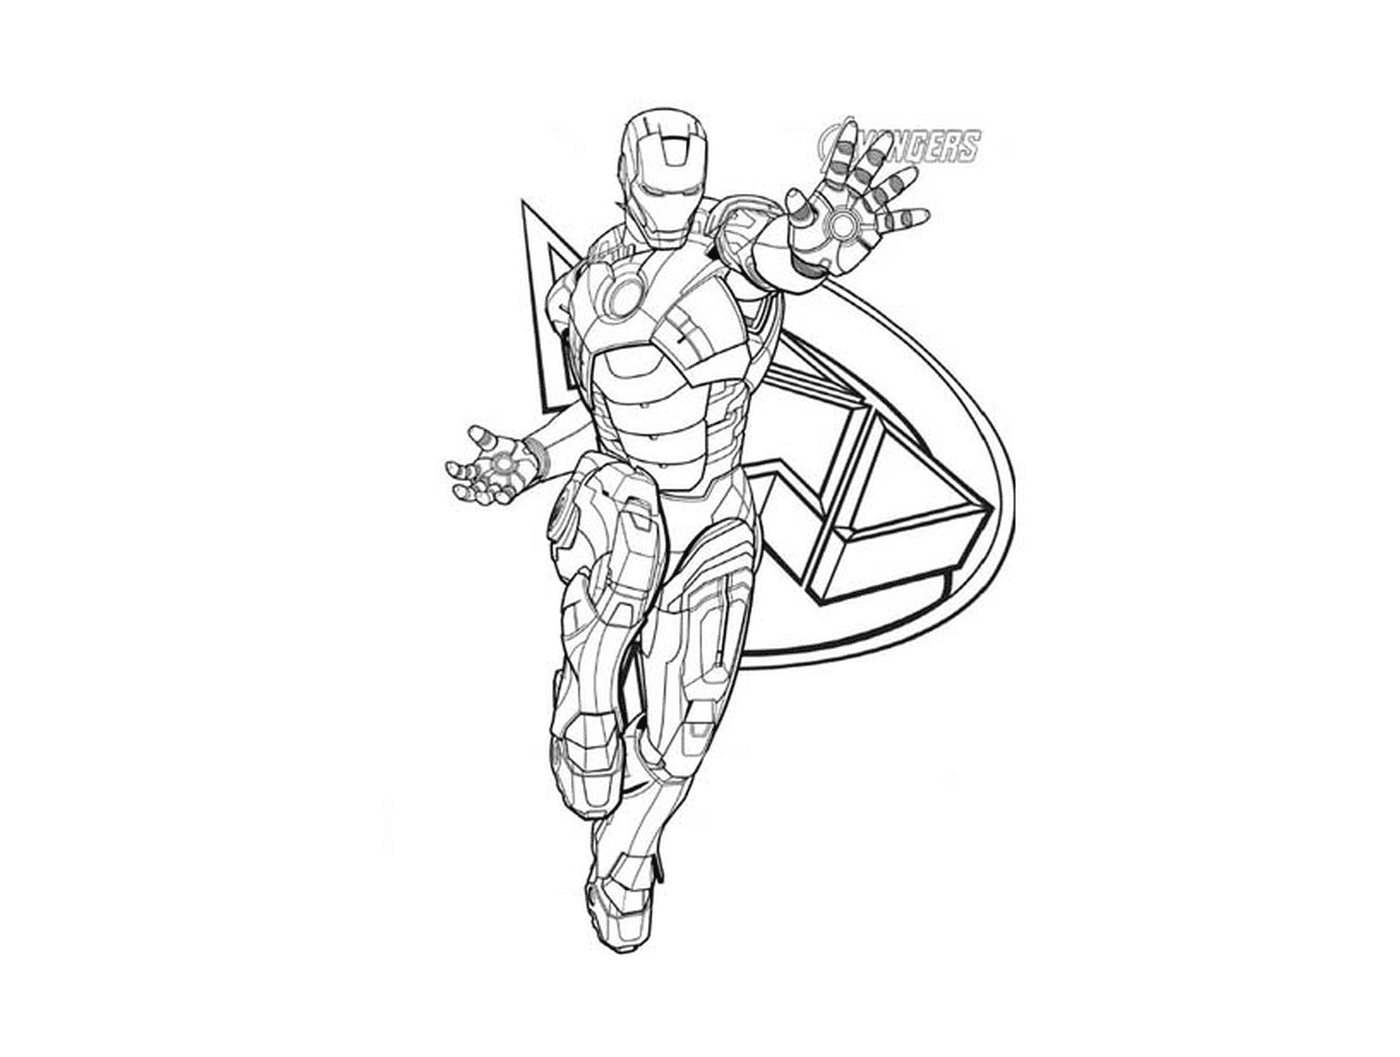  An image of Iron Man to print 